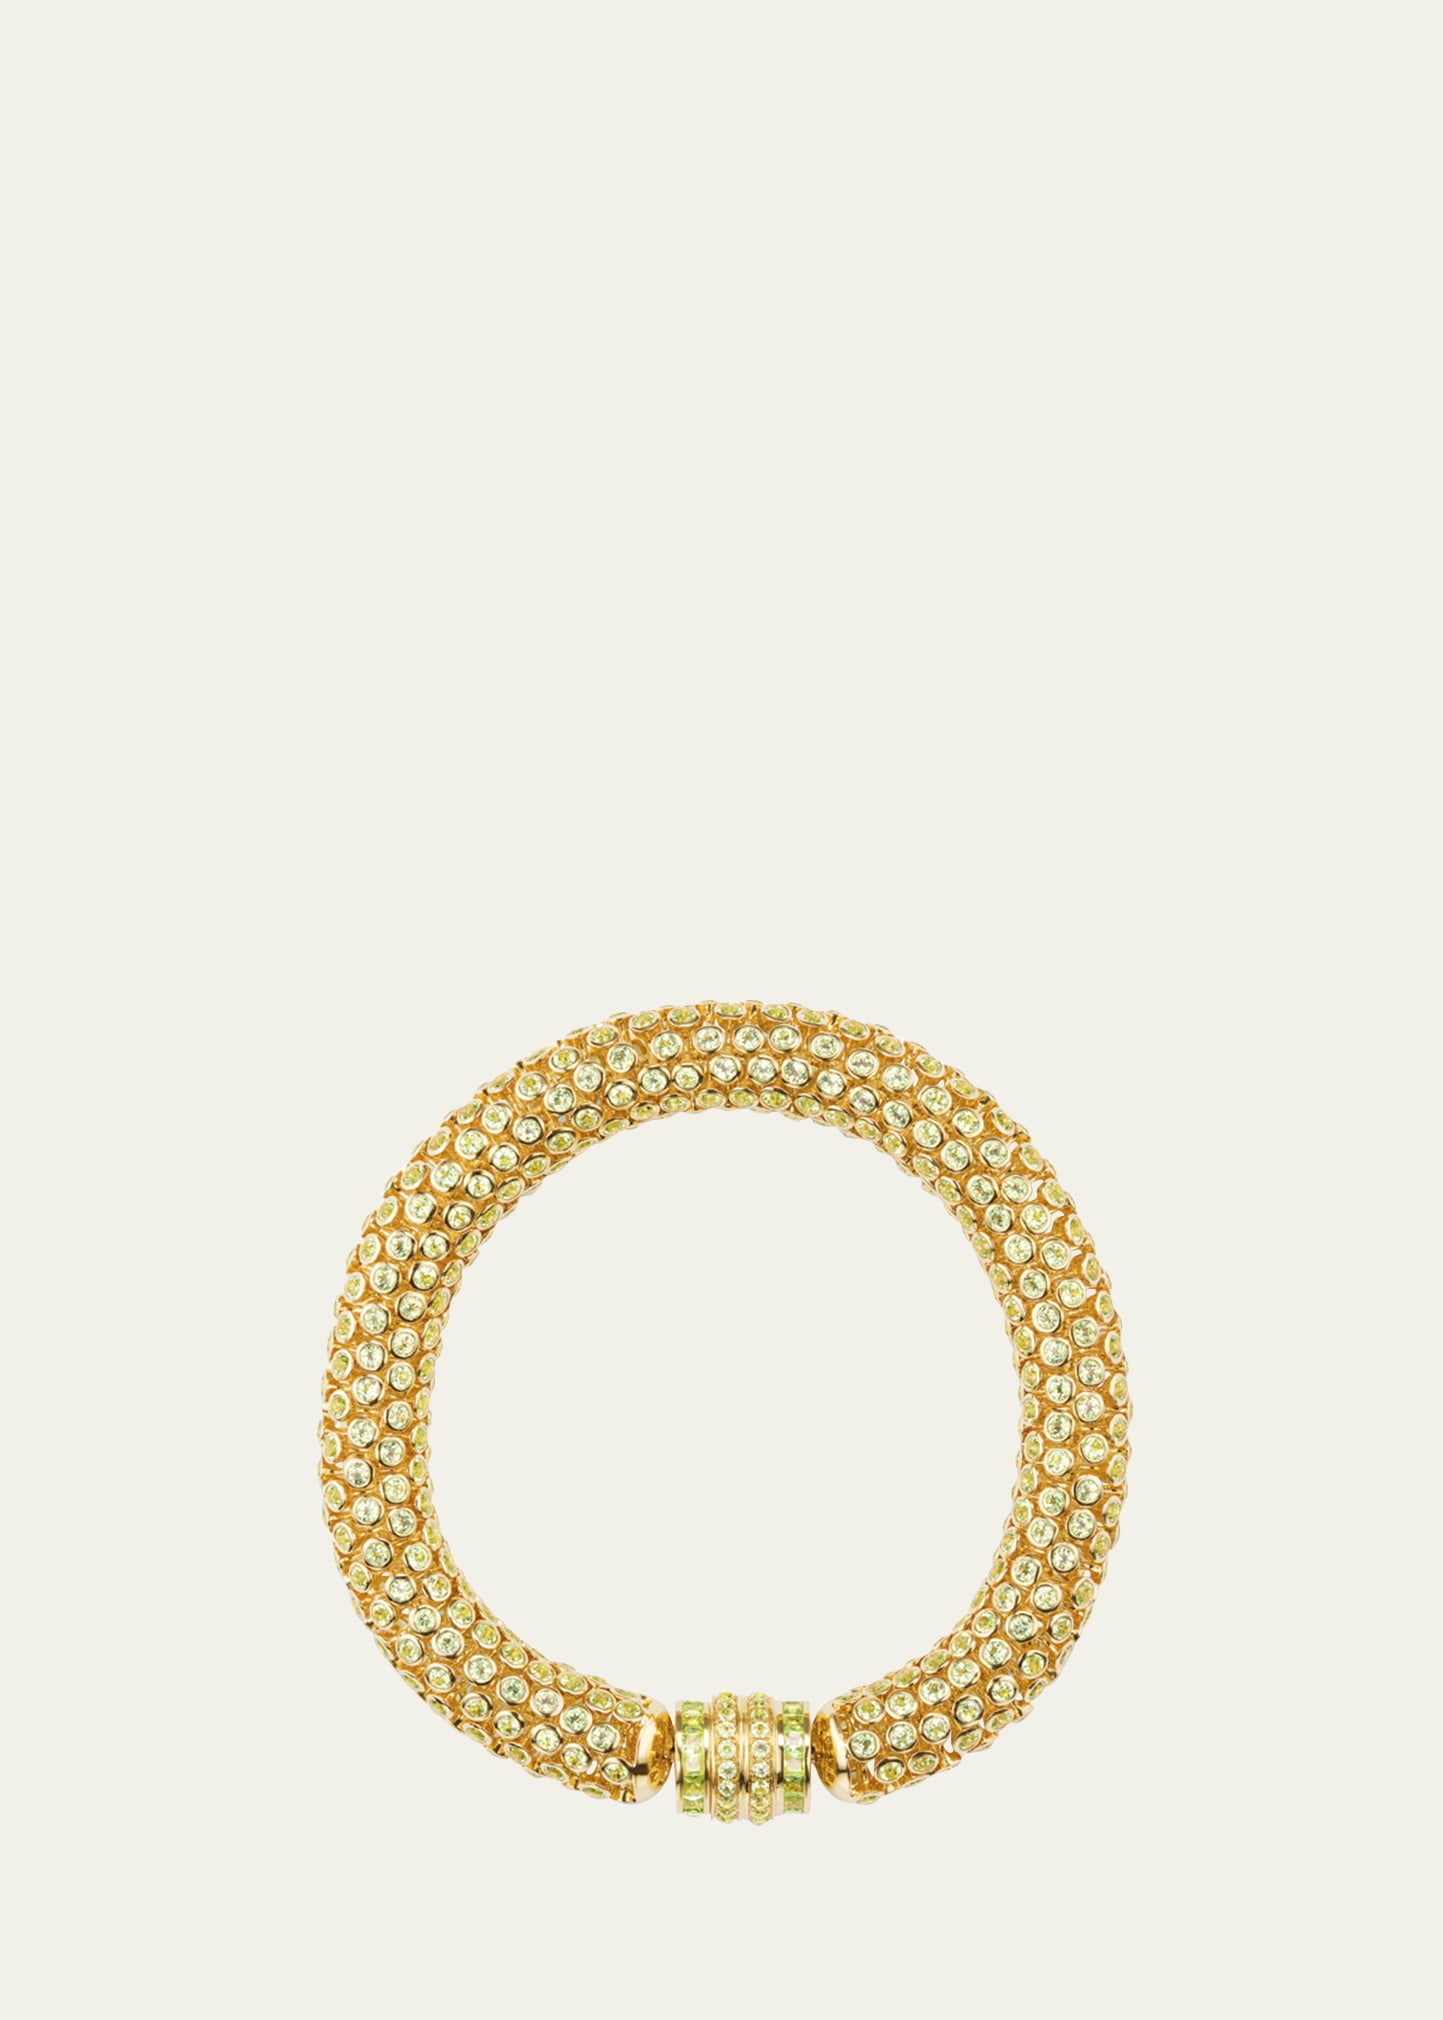 Dancing Queen Bracelet in Yellow Gold with Peridot